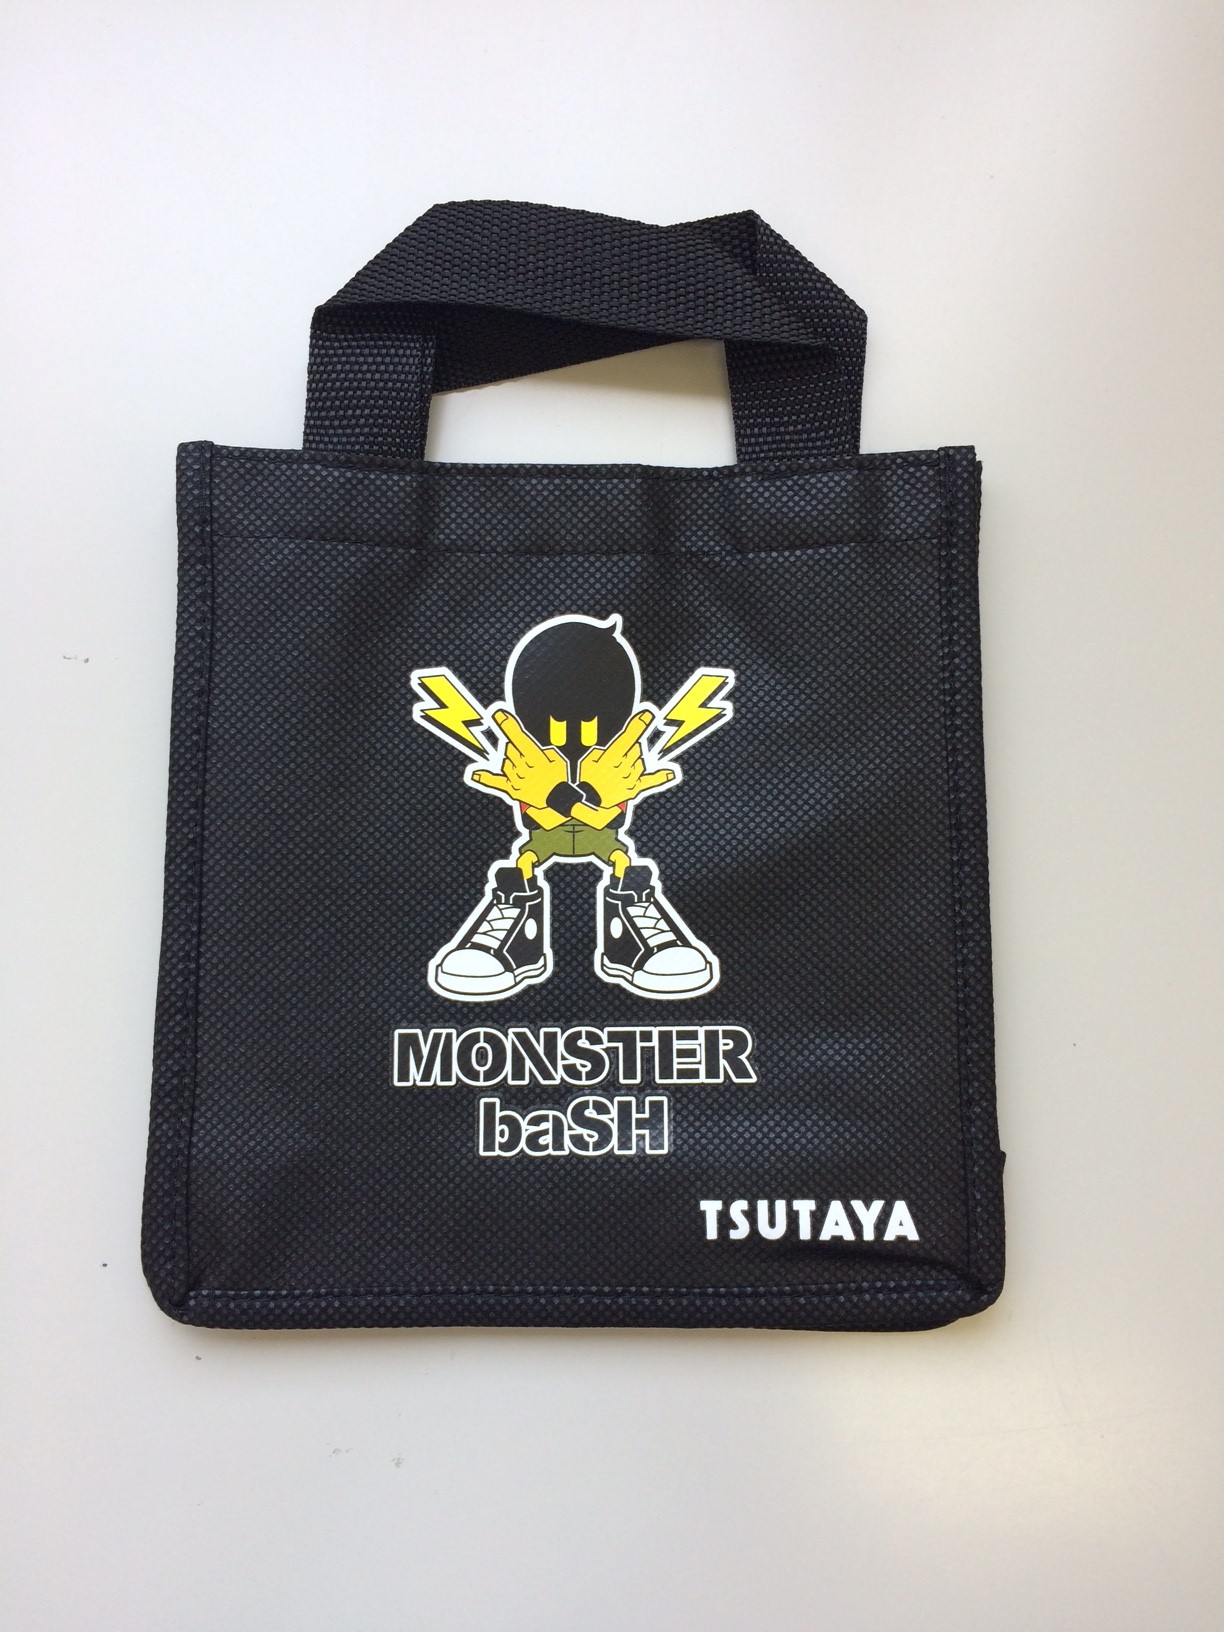 Monster Bash Tsutayaレンタル用マイバッグ 中四国限定の数量限定で販売決定 カルチュア コンビニエンス クラブ株式会社のプレスリリース